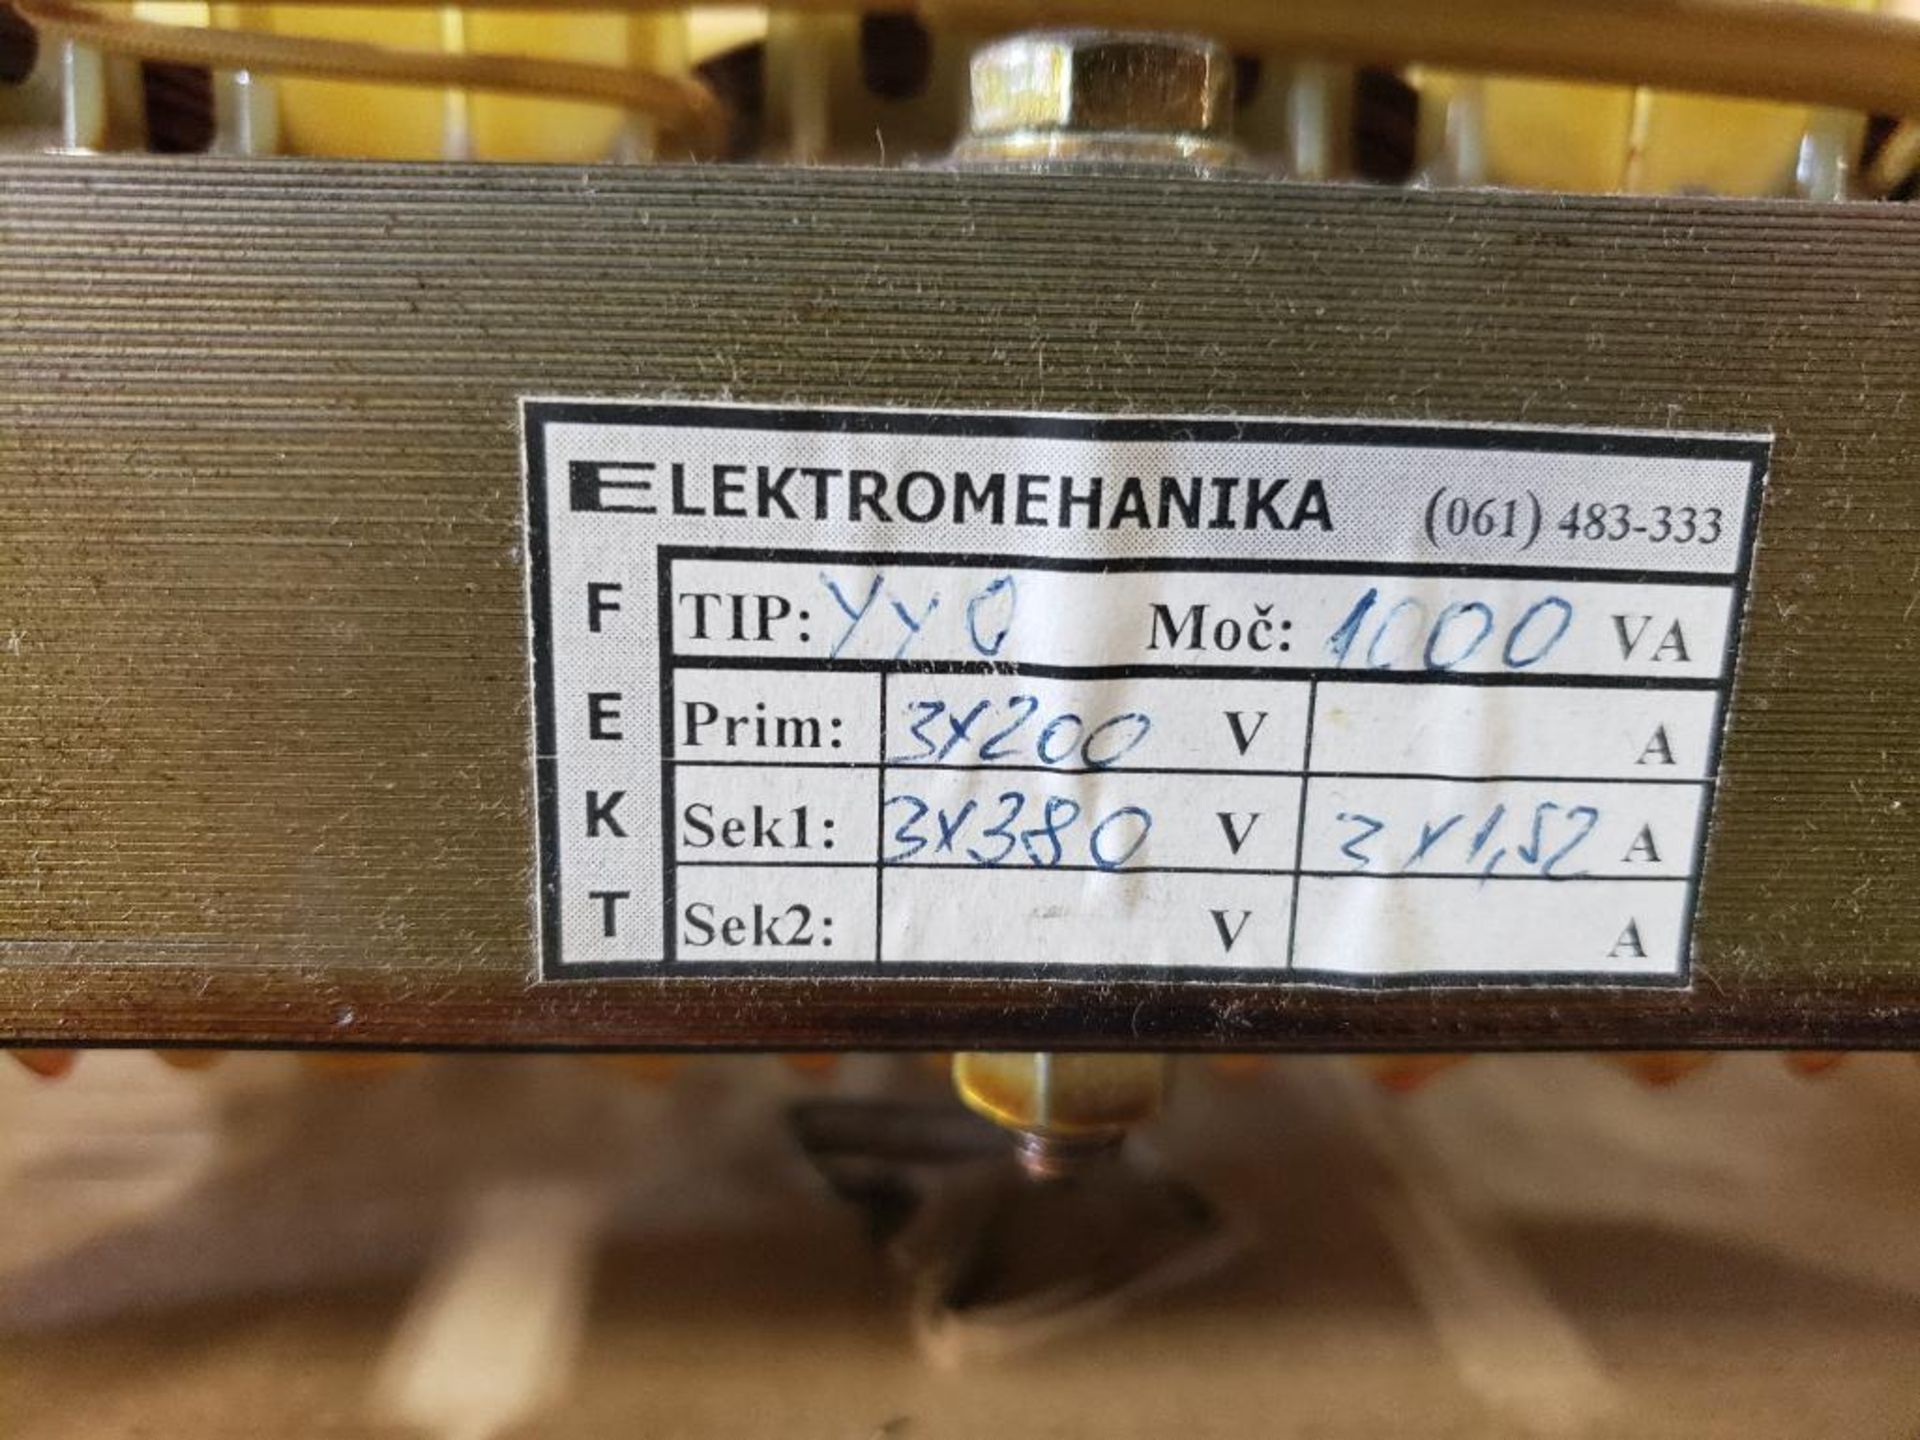 Elektromehanika EIT/L 1000VA transformer. - Image 2 of 4